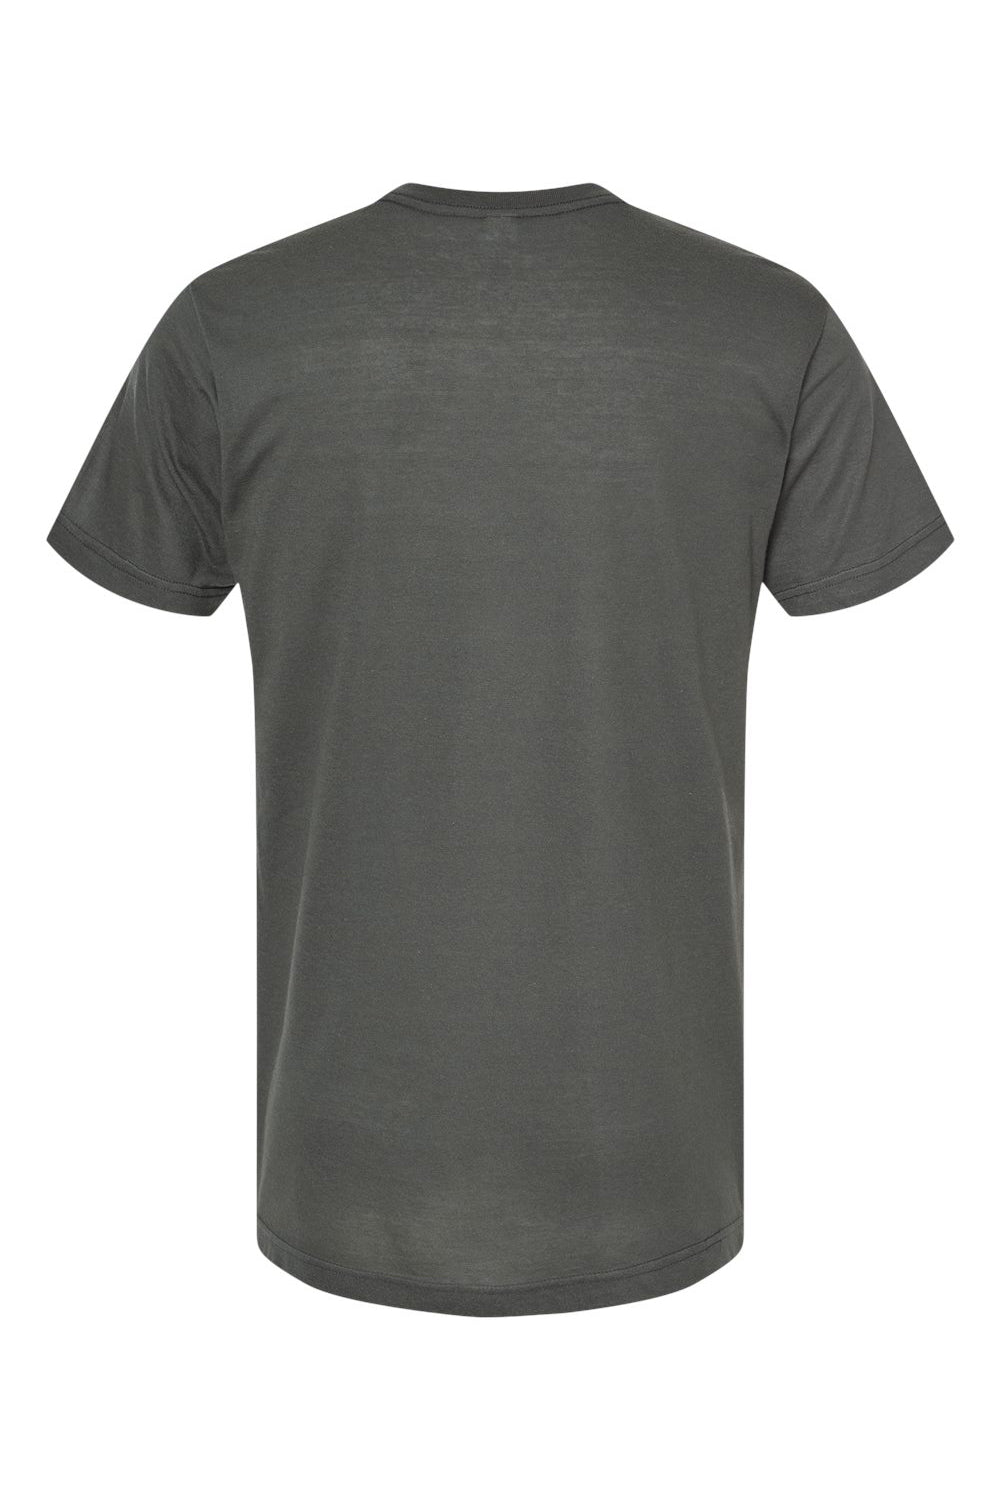 Tultex 207 Mens Poly-Rich Short Sleeve V-Neck T-Shirt Charcoal Grey Flat Back